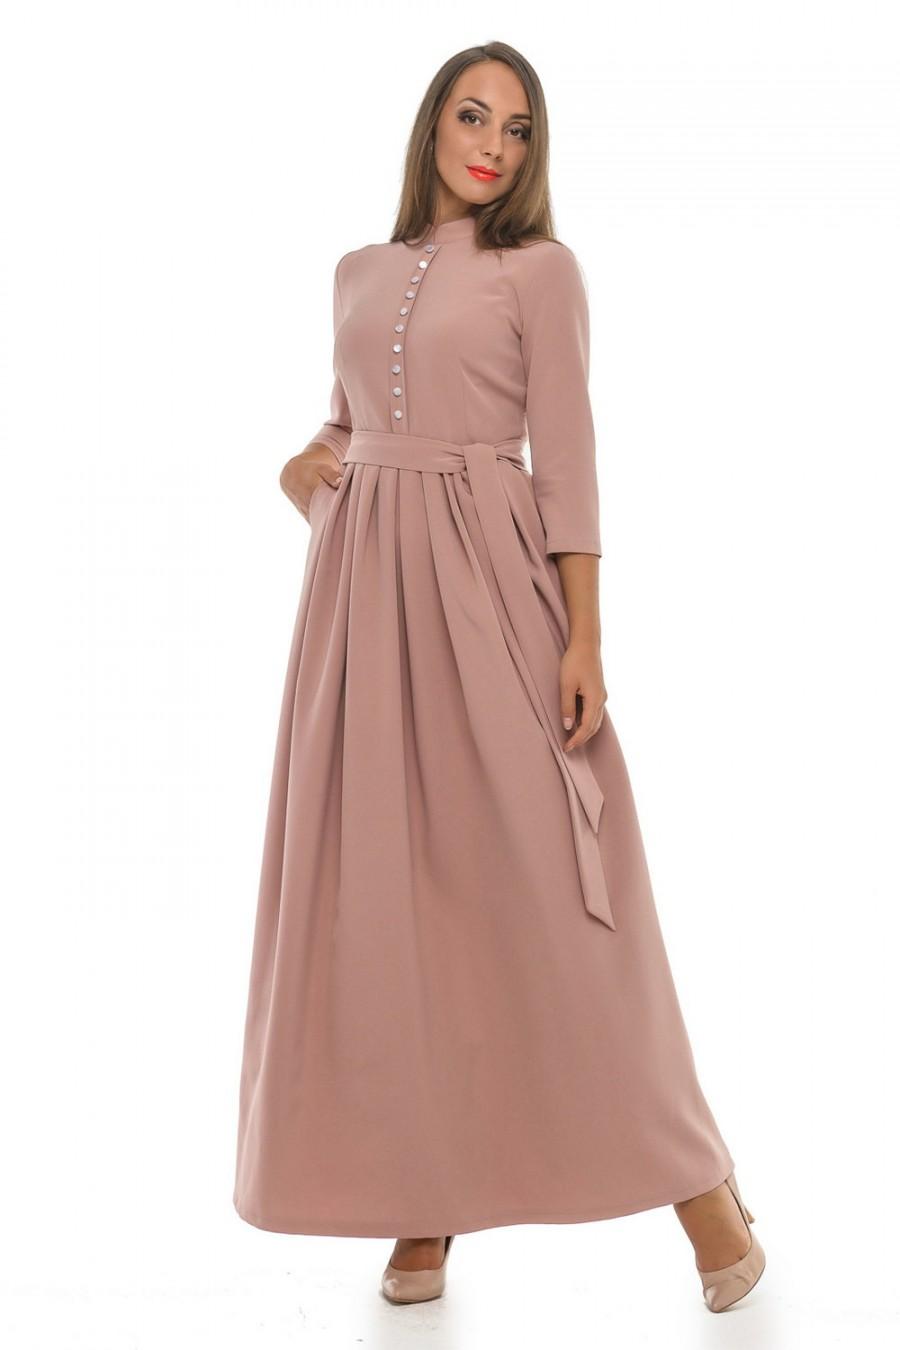 Mariage - Very soft Beige dress, Long dress with pleats, Formal Maxi dress, Mother of the bride dress, long sleeve maxi dress.